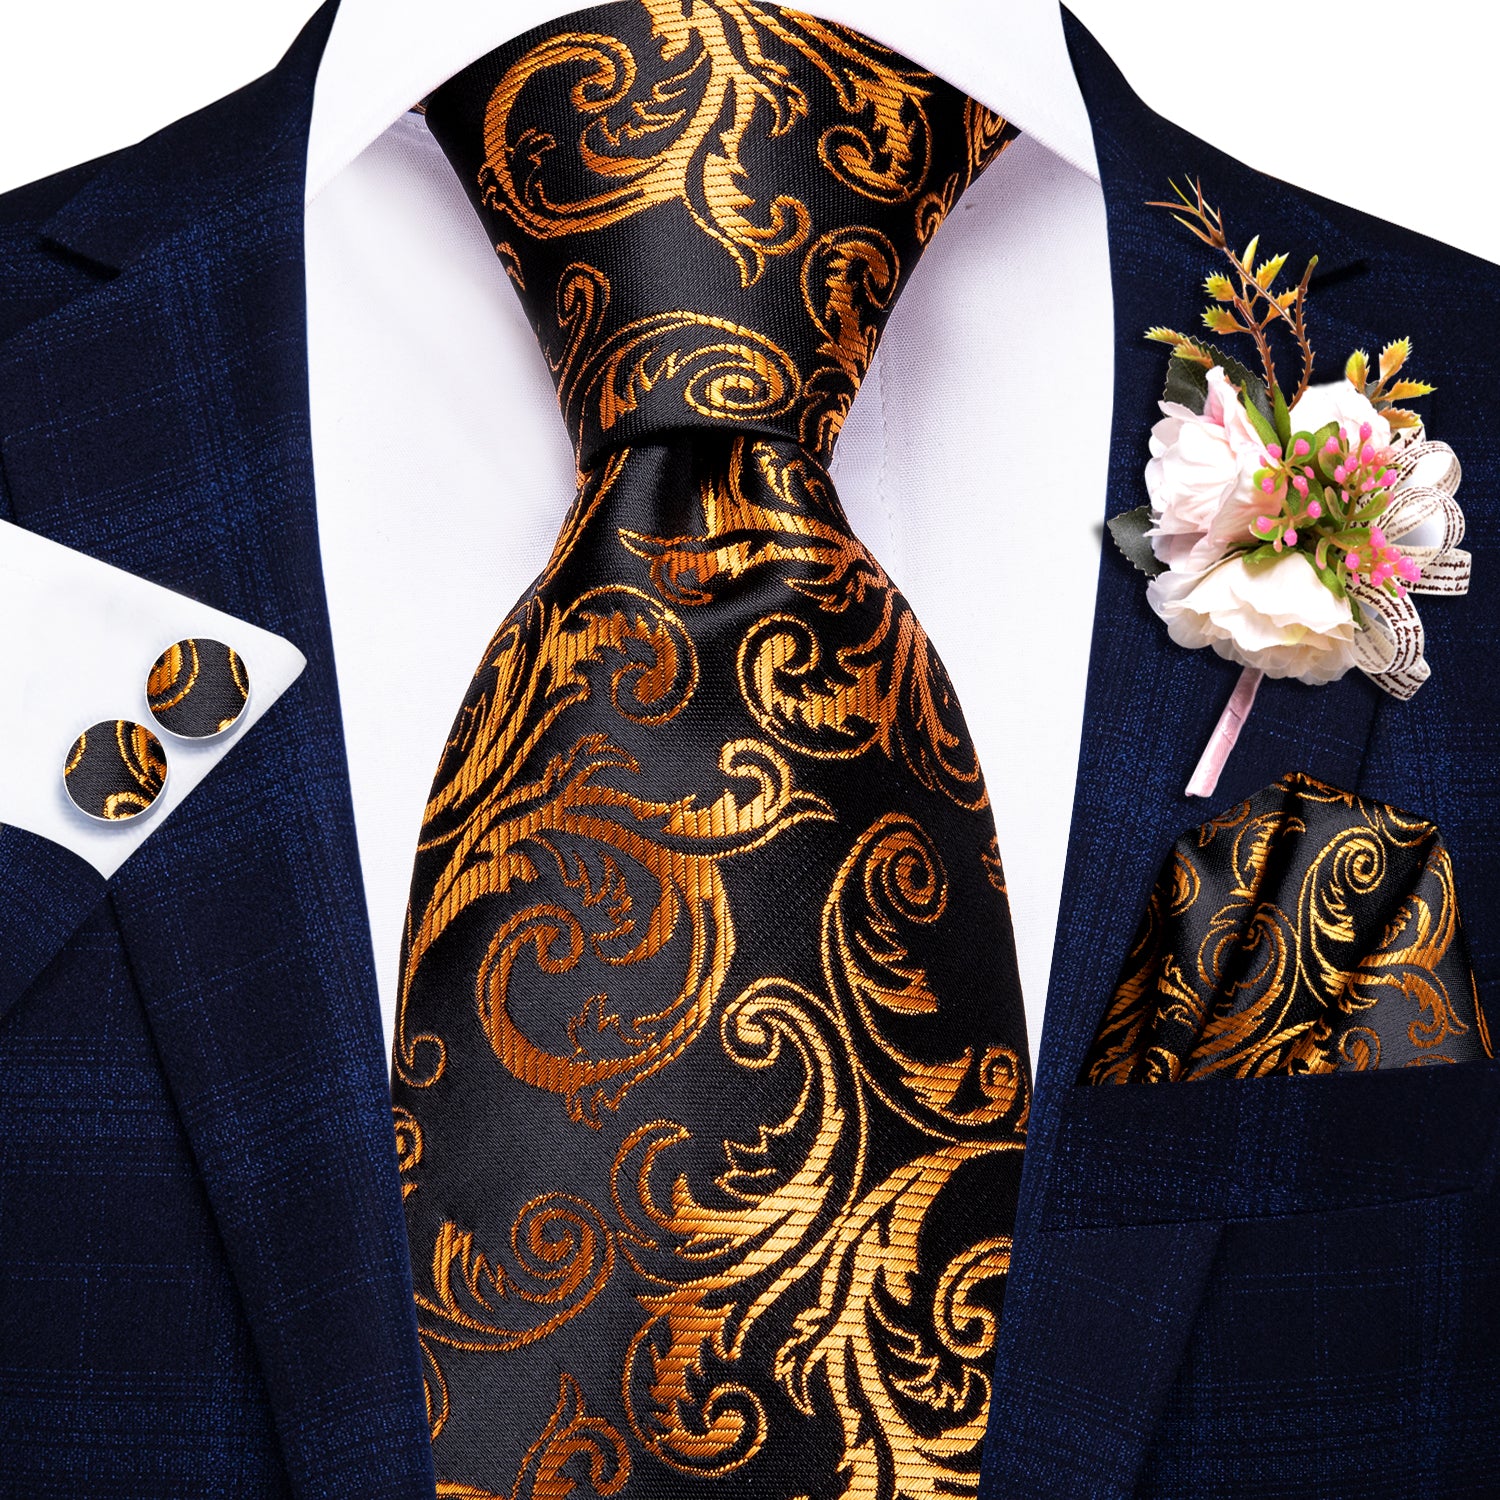 Black Golden Paisley Tie Handkerchief Cufflinks Set with Wedding Brooch